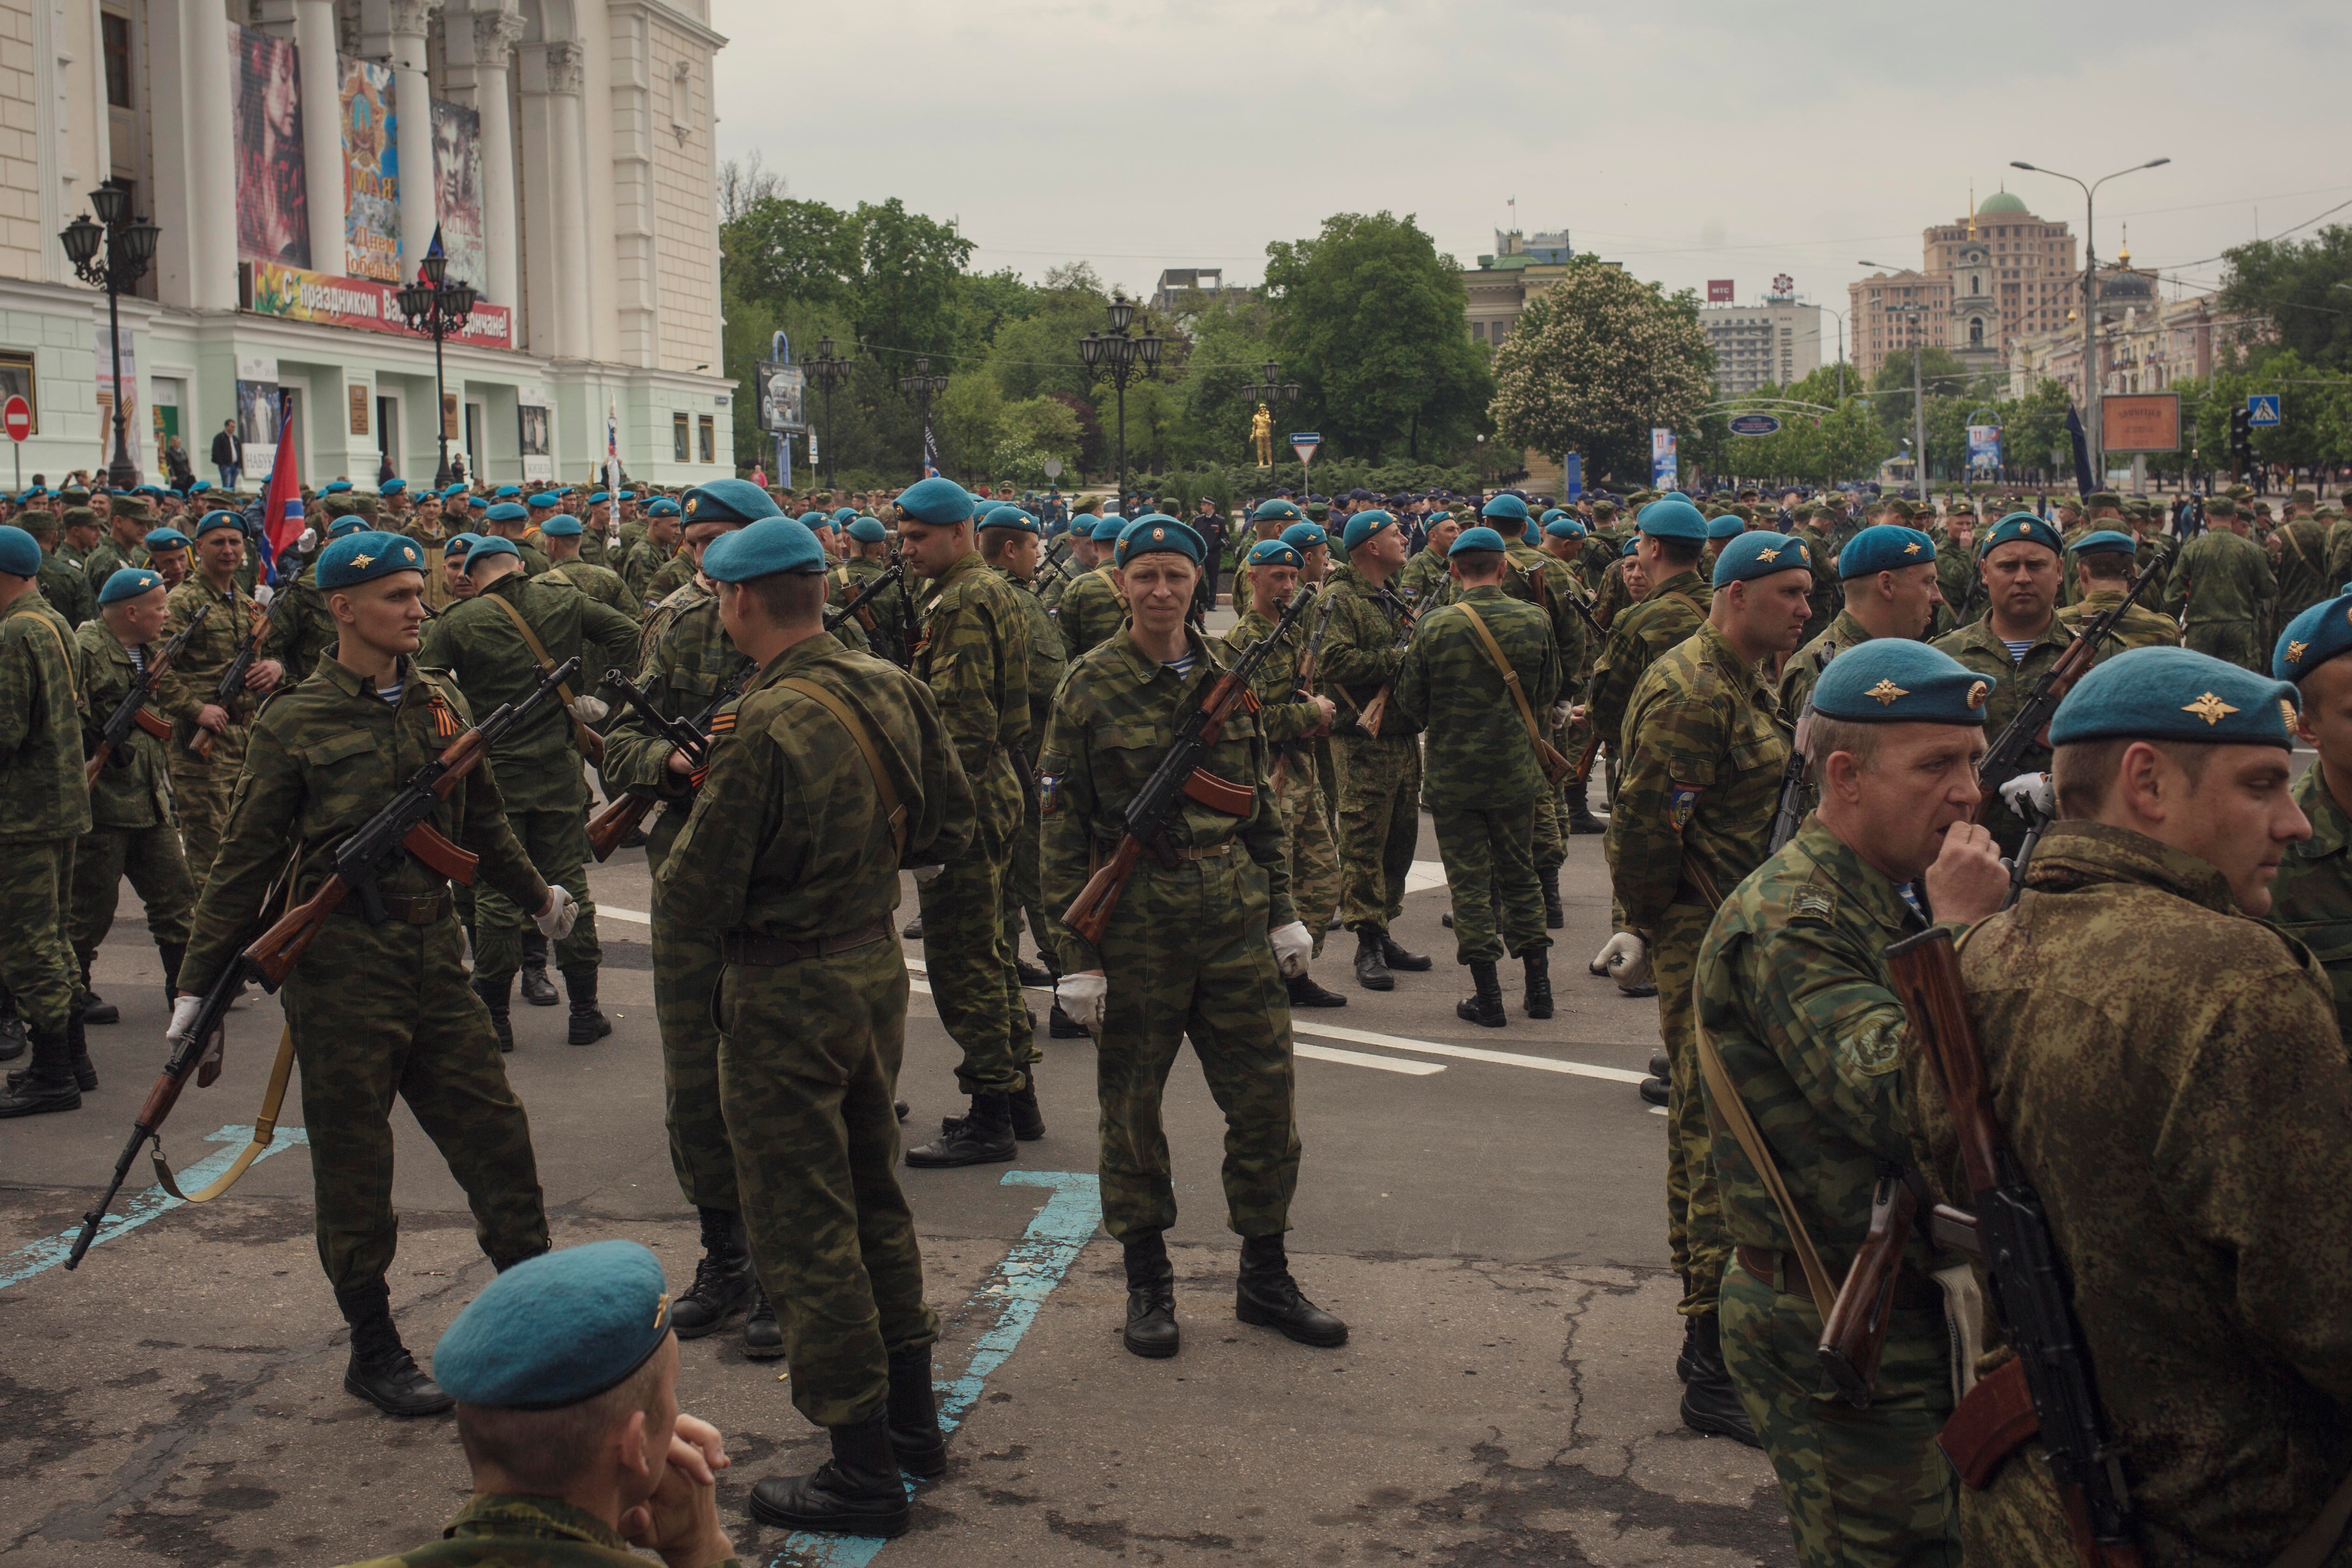 Øver til paraden: Hver 9. mai feires frigjøringen for andre verdenskrig i Russland og i Donetsk. Denne våren øvde soldatene i mange dager på paraden.